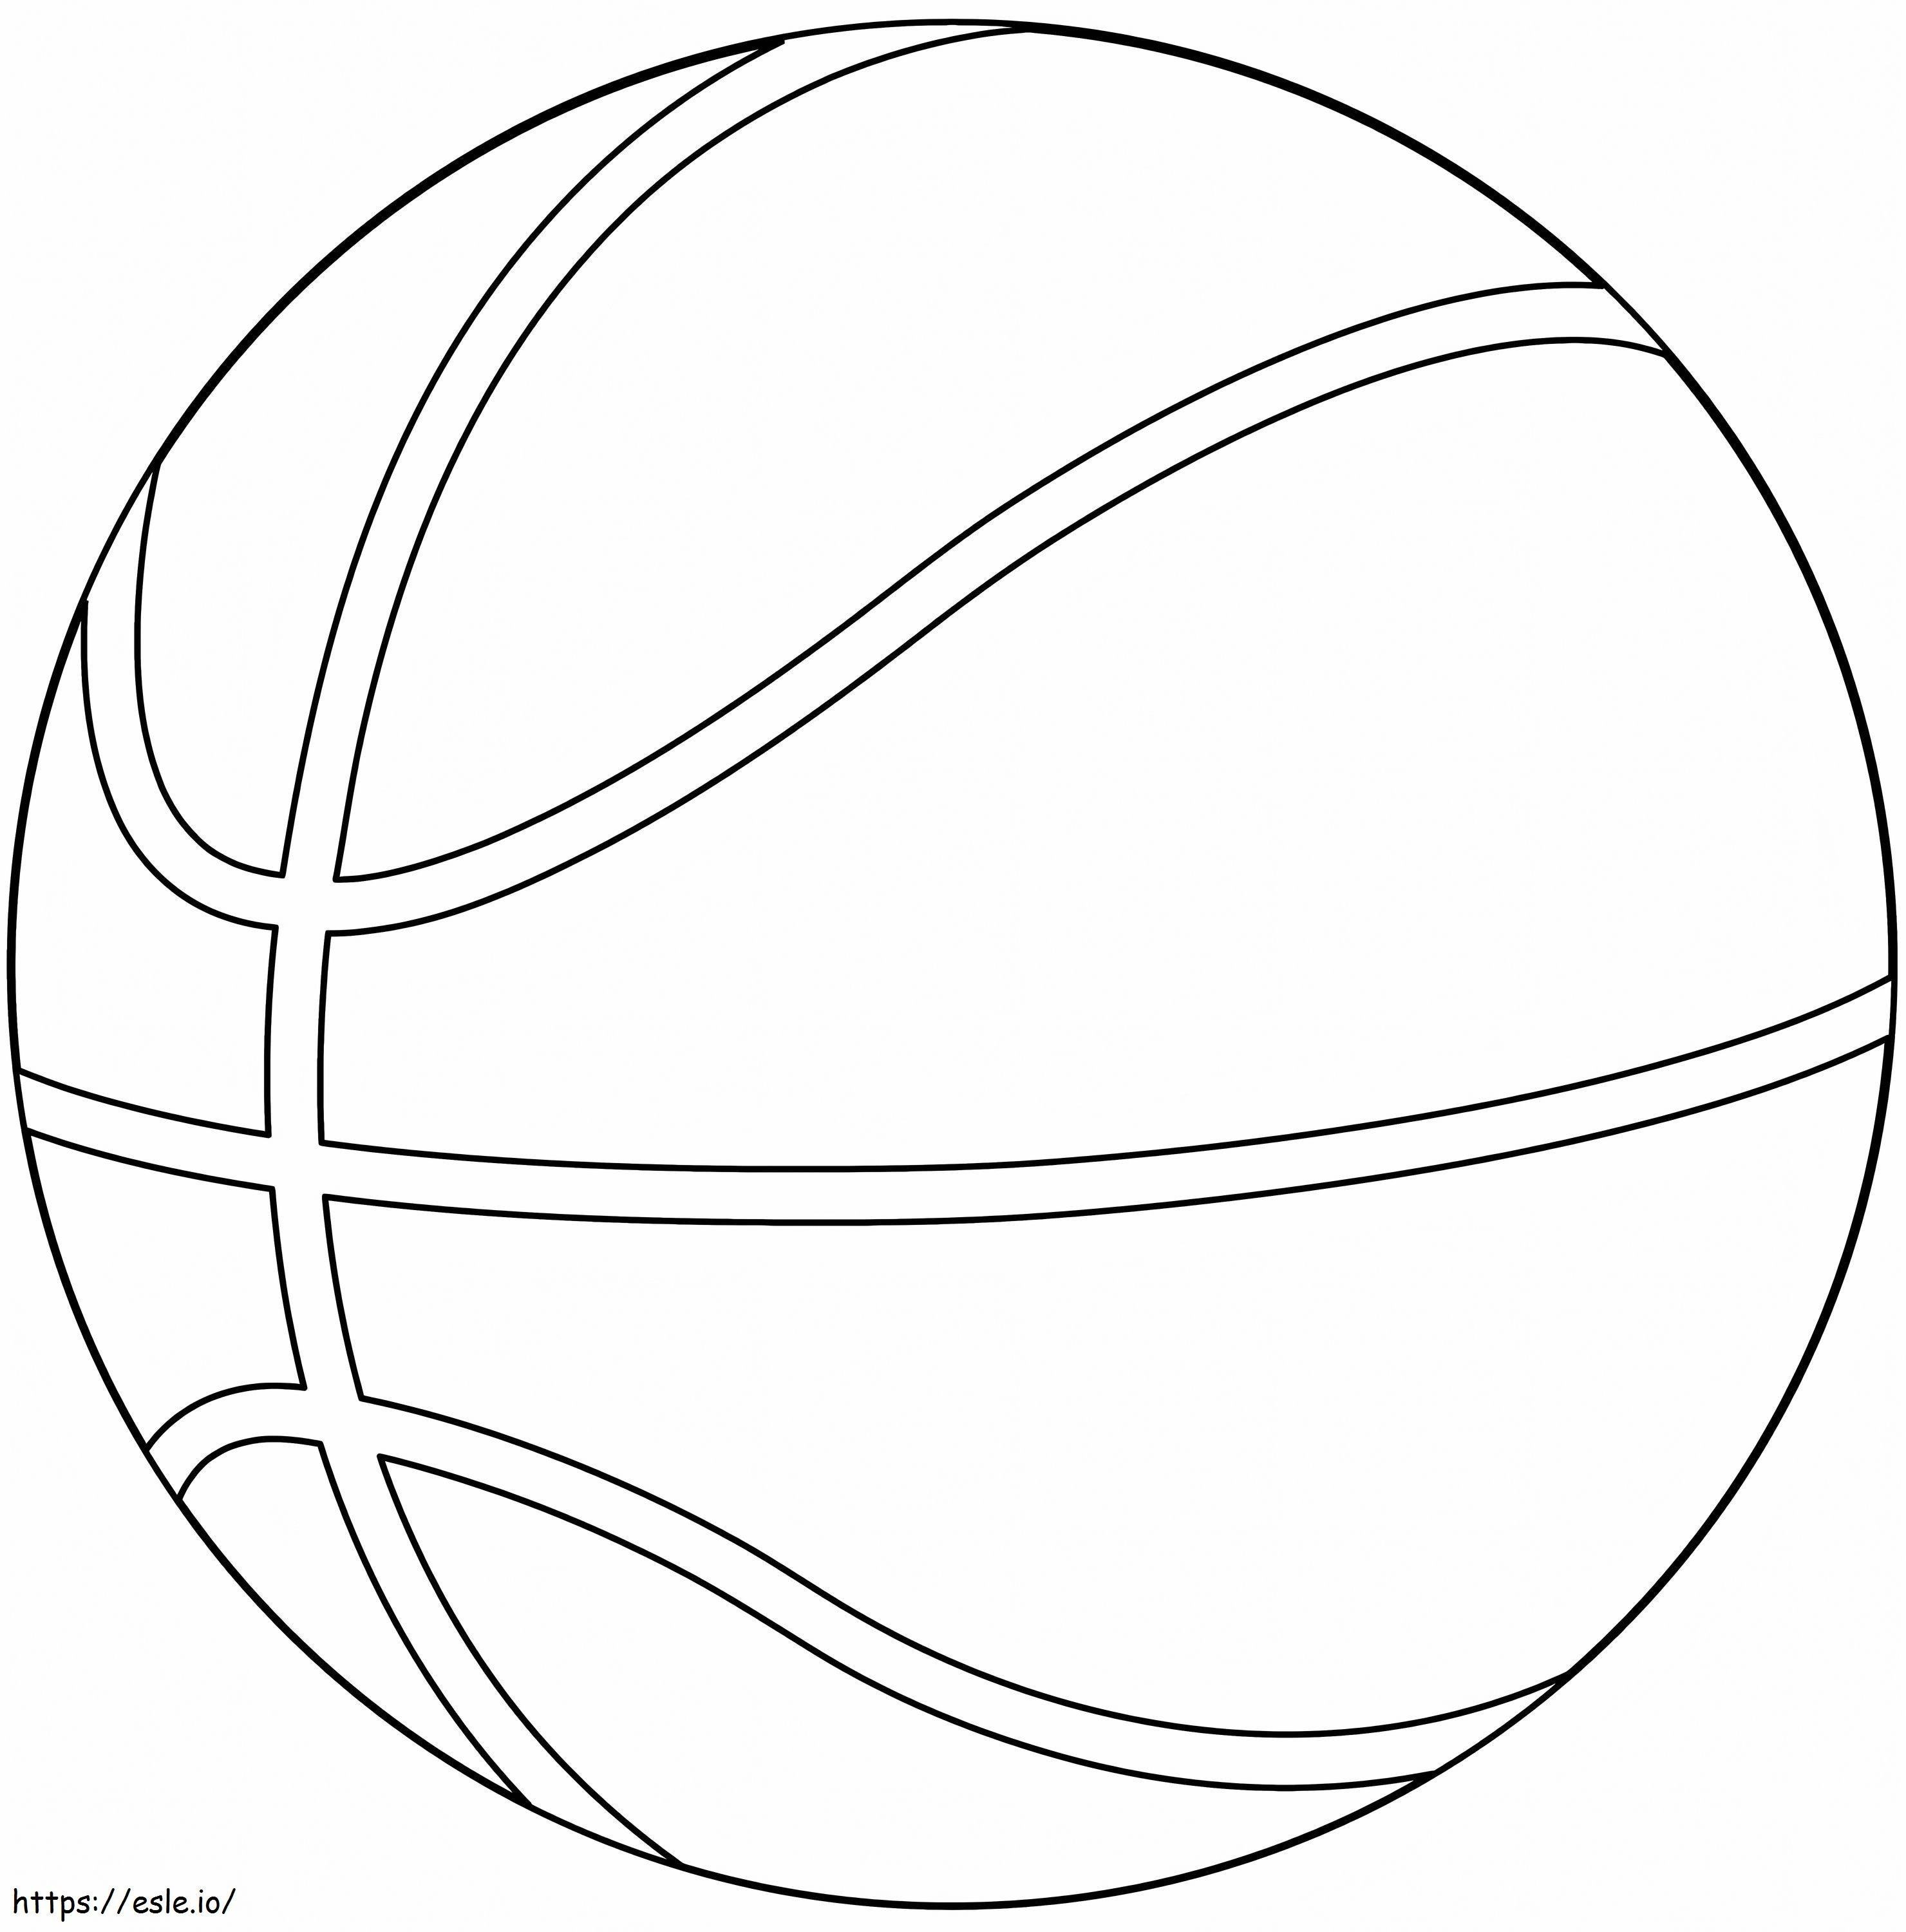 1559608888 Basketbol Topu A4 boyama